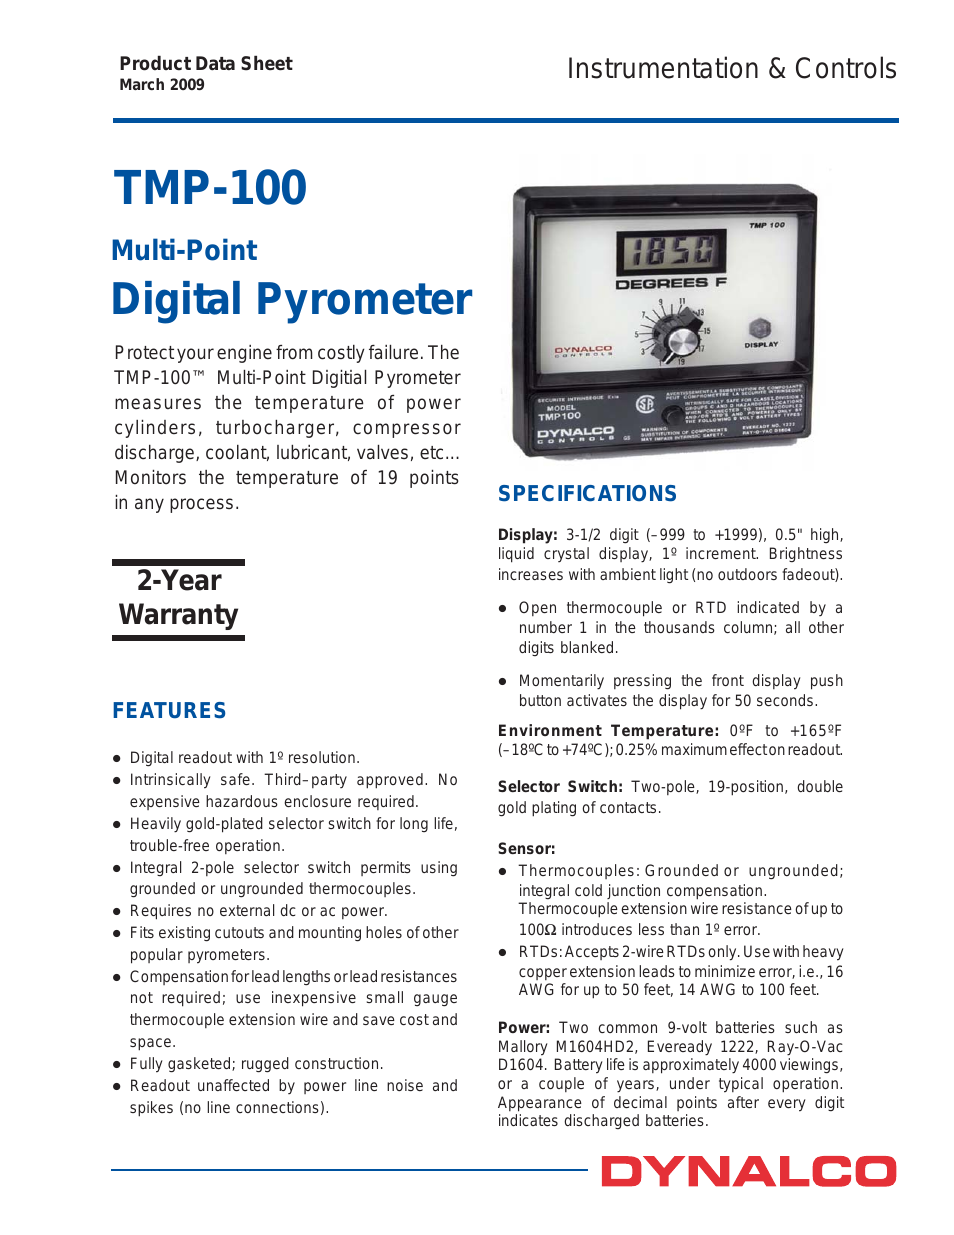 TMP-100 Temperature Monitor